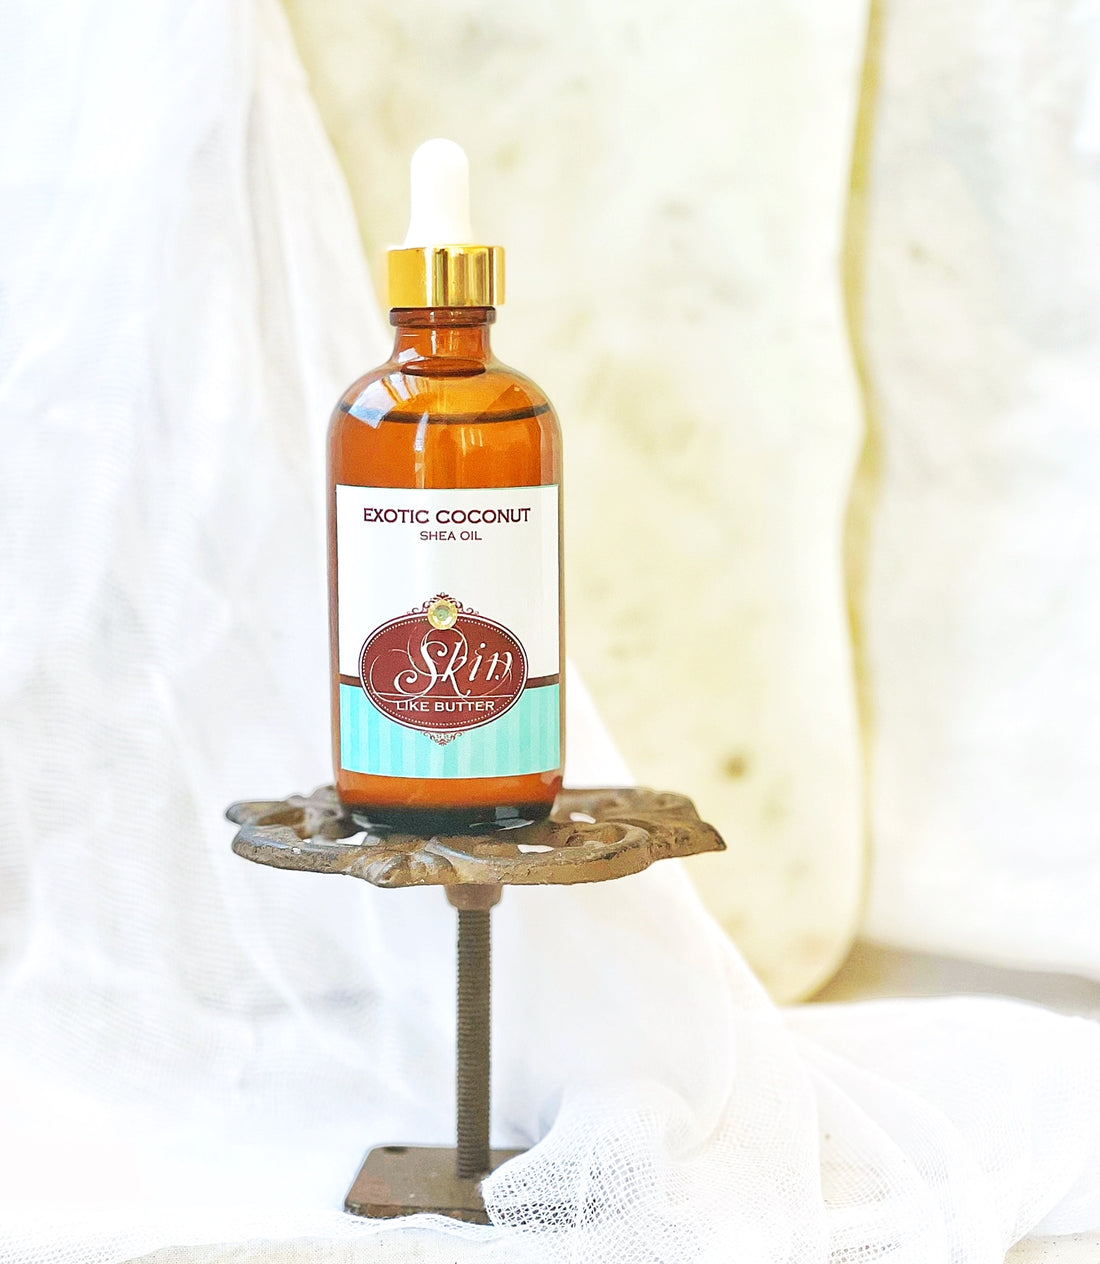 EXOTIC COCONUT - Shea Body Oil -in 4 oz amber bottles, highly moisturizing